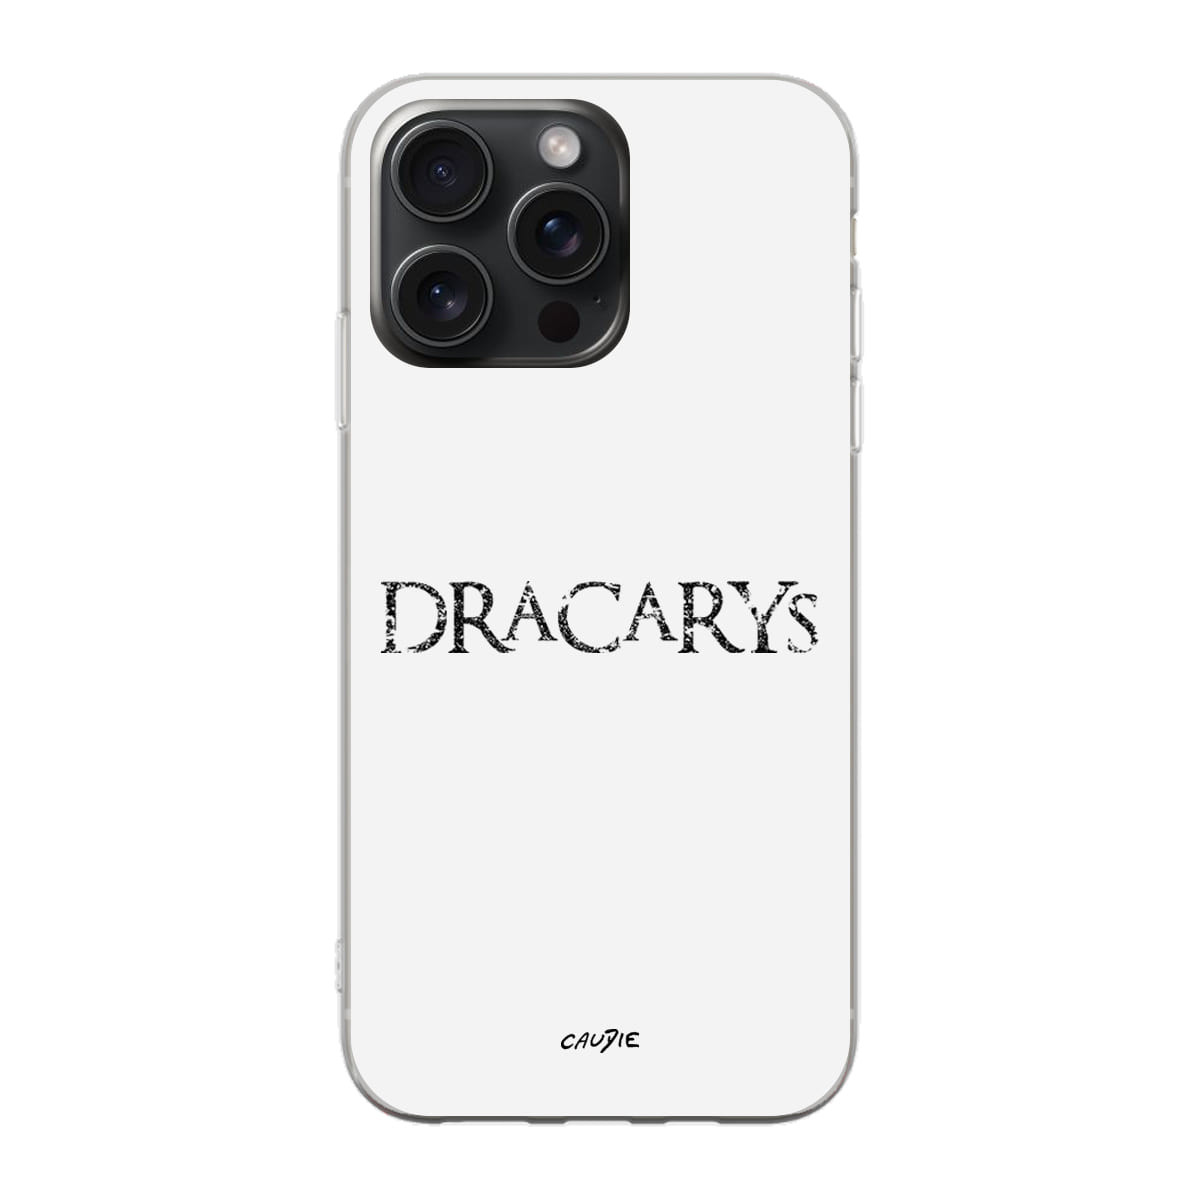 Dracarys - Phone case - Game Of Thrones - Caudie